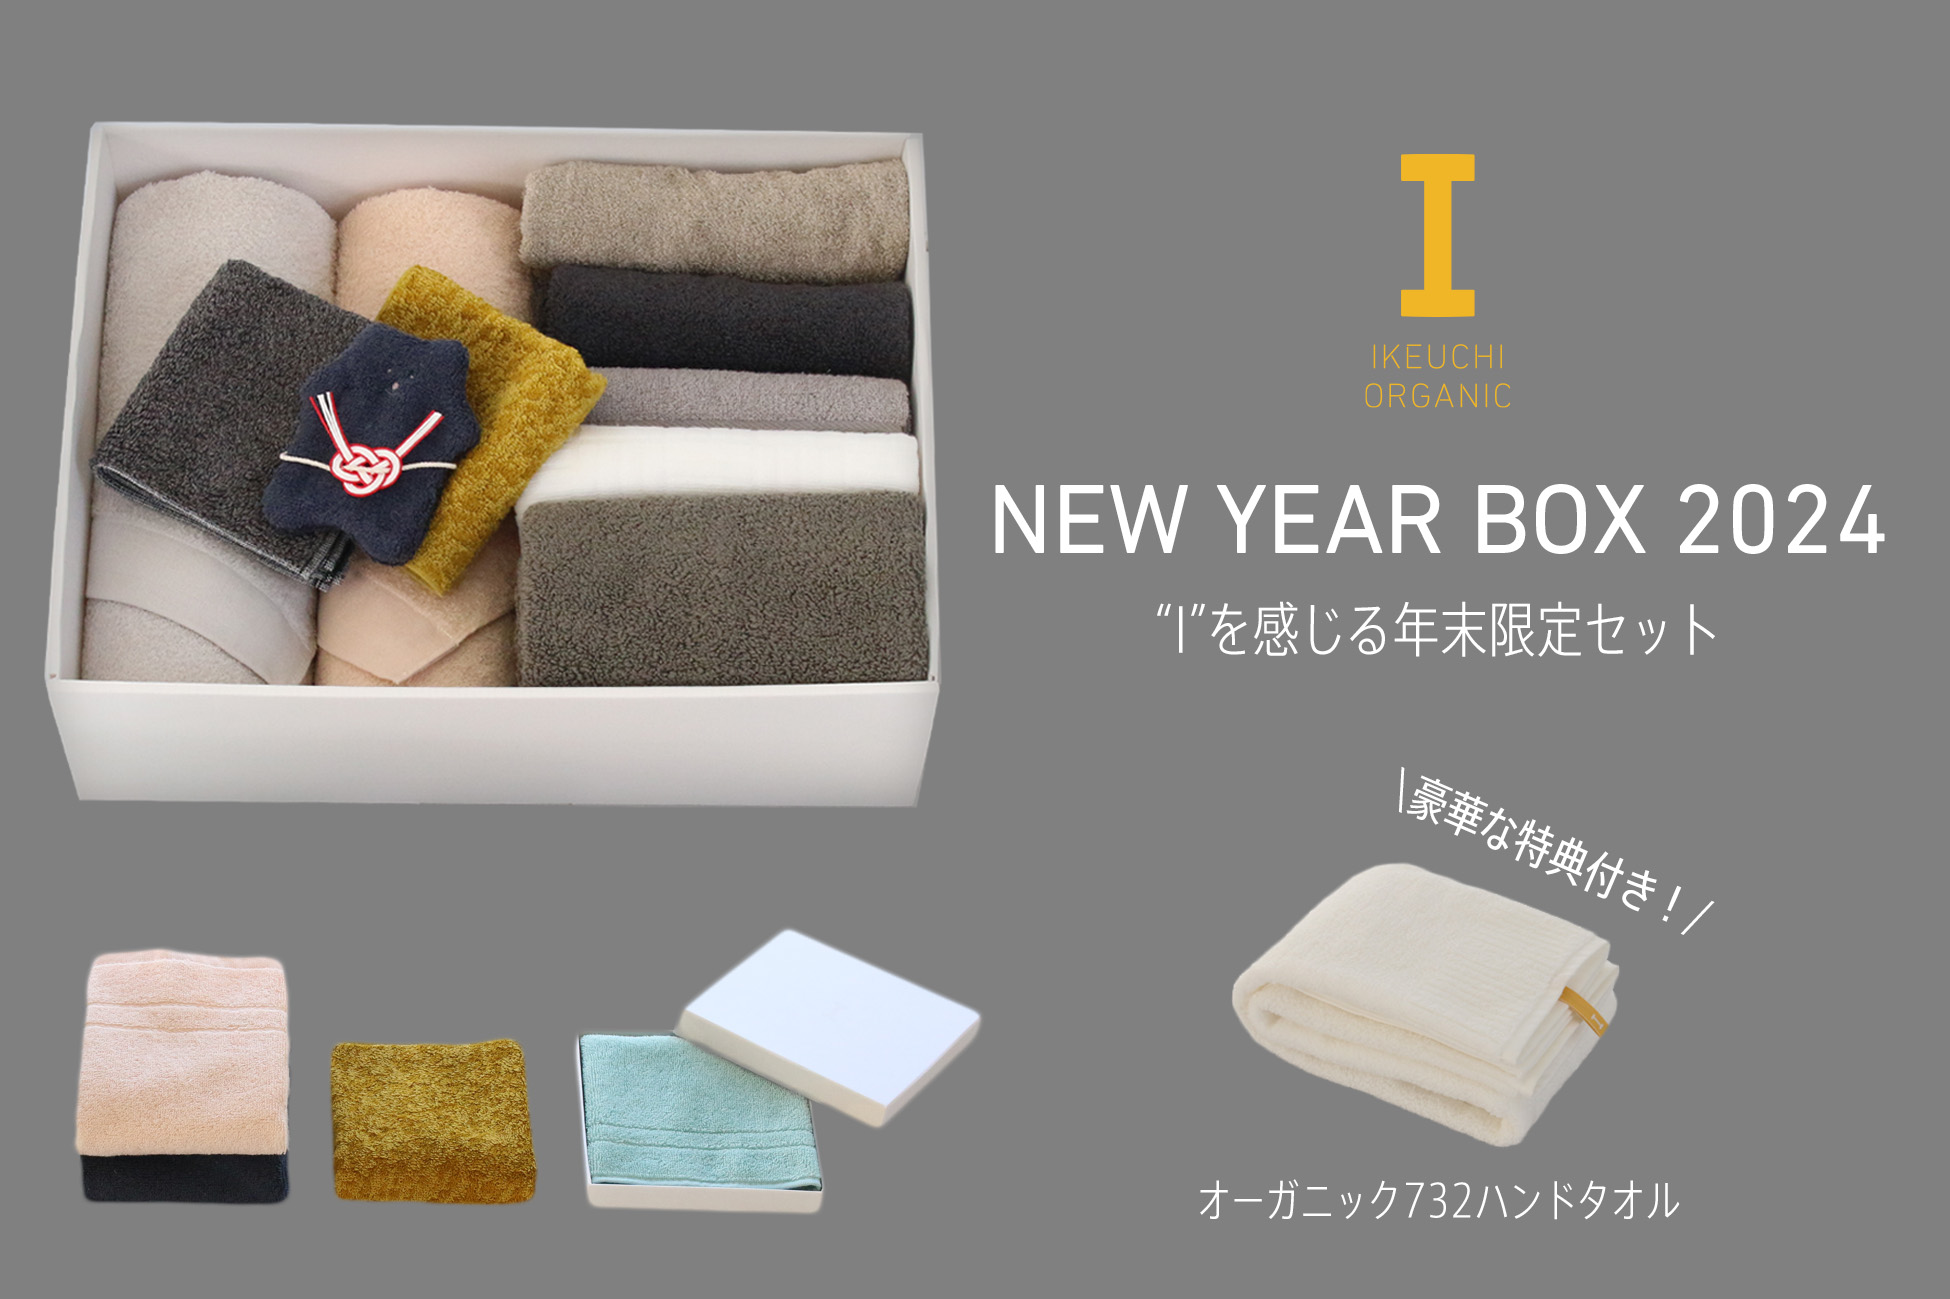 IKEUCHI NEW YEAR BOX